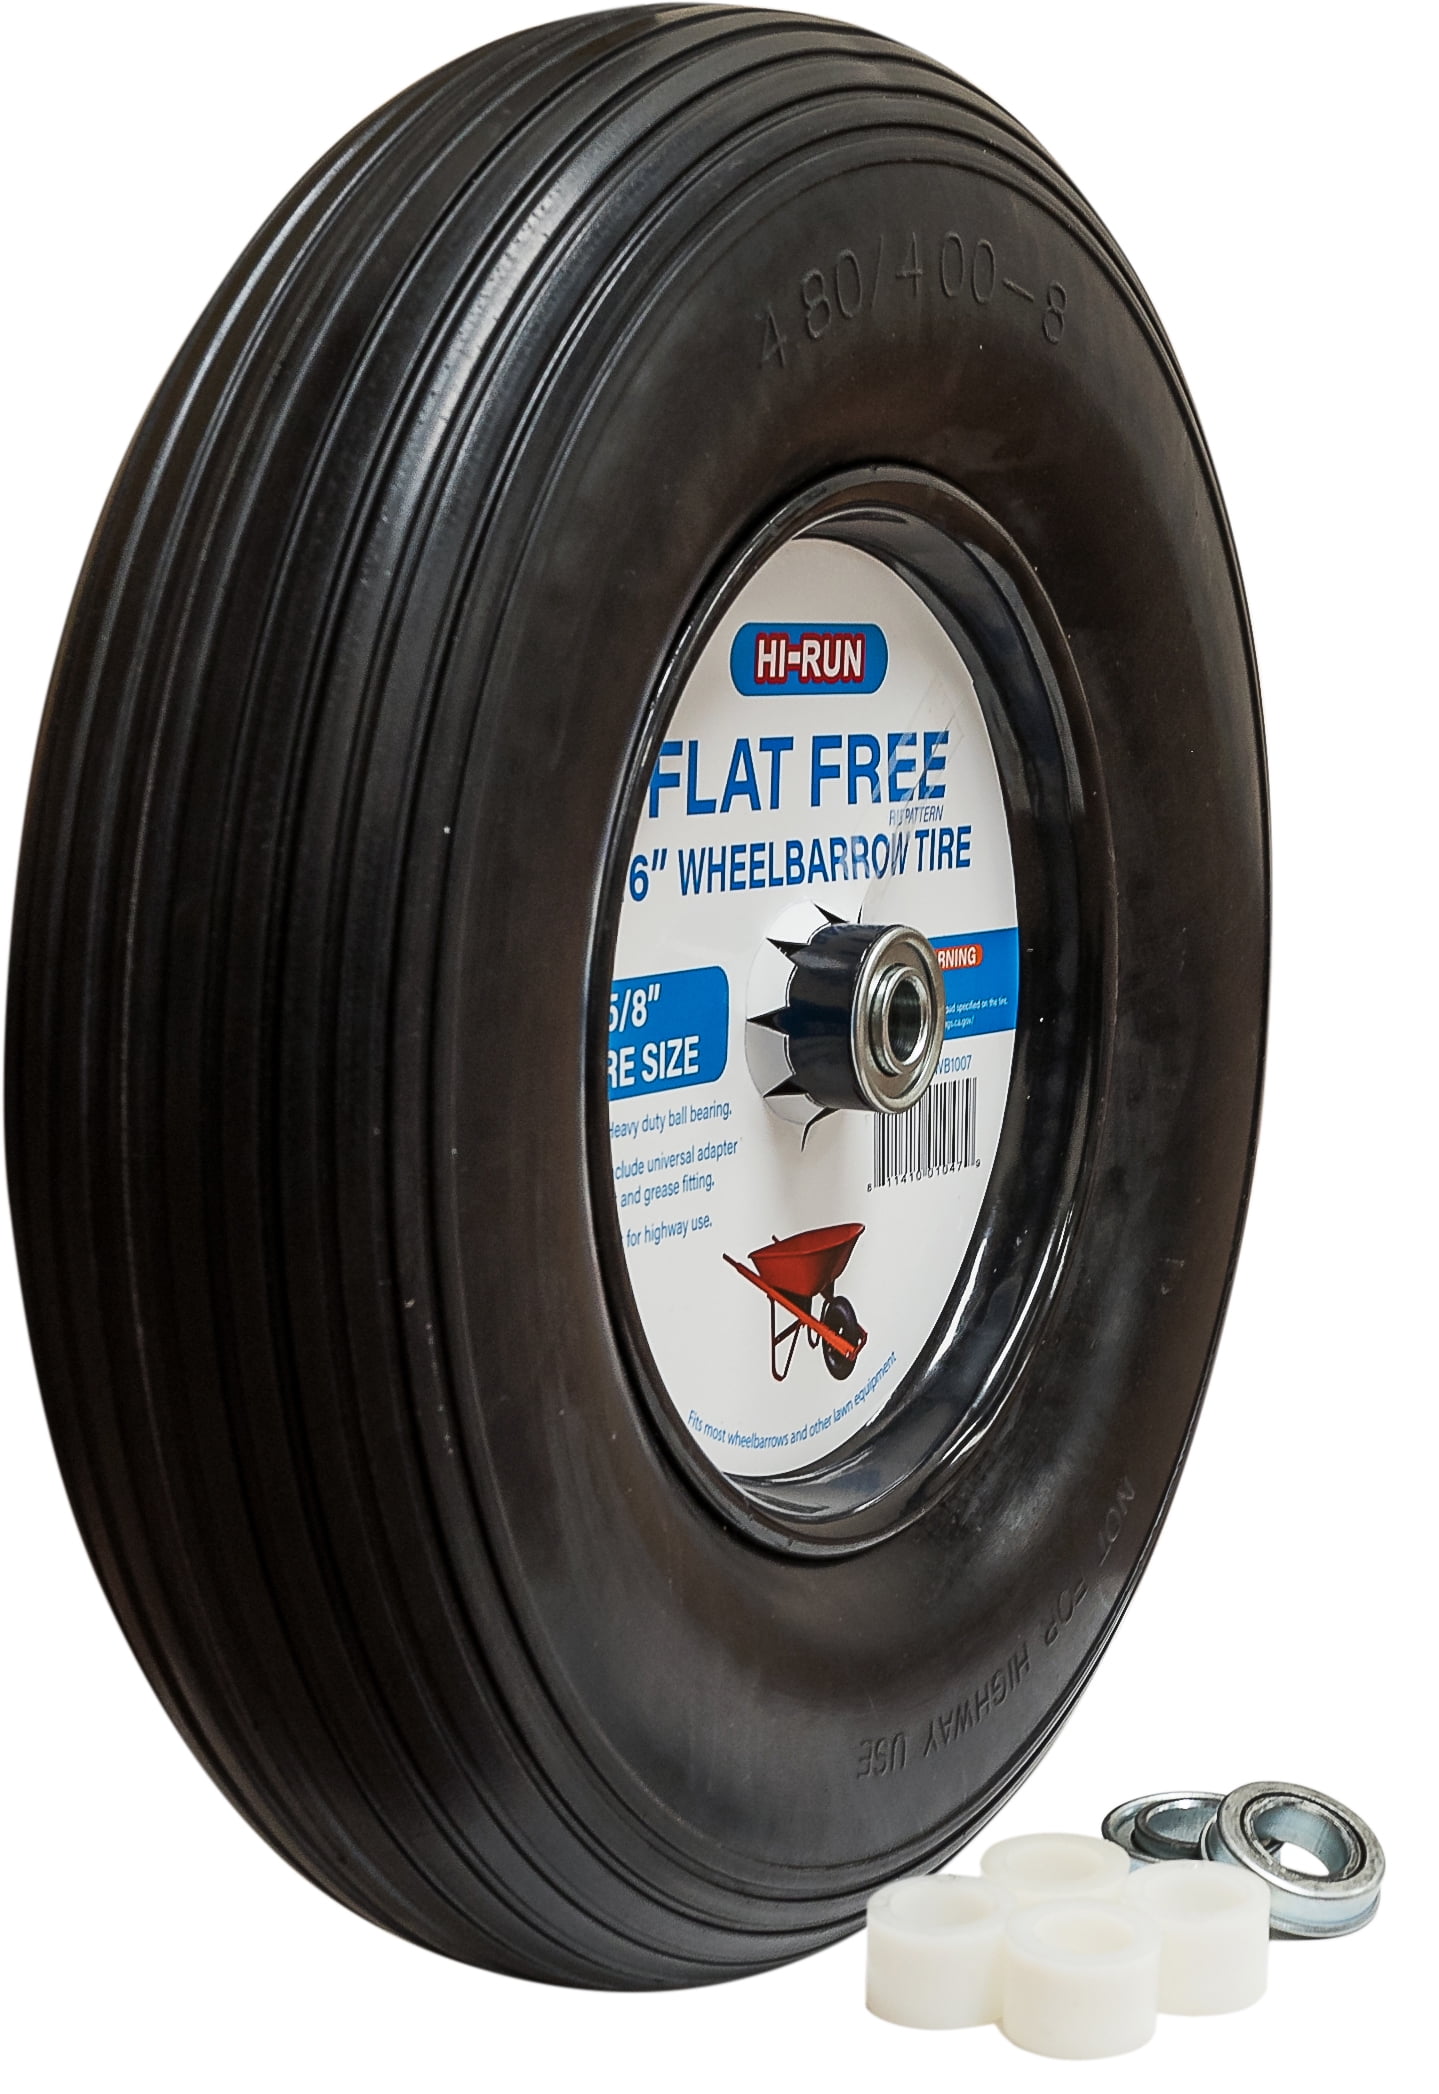 16" flat-free wheel barrow flat free tire Foamed Polyurethane wheelbarrow tire 